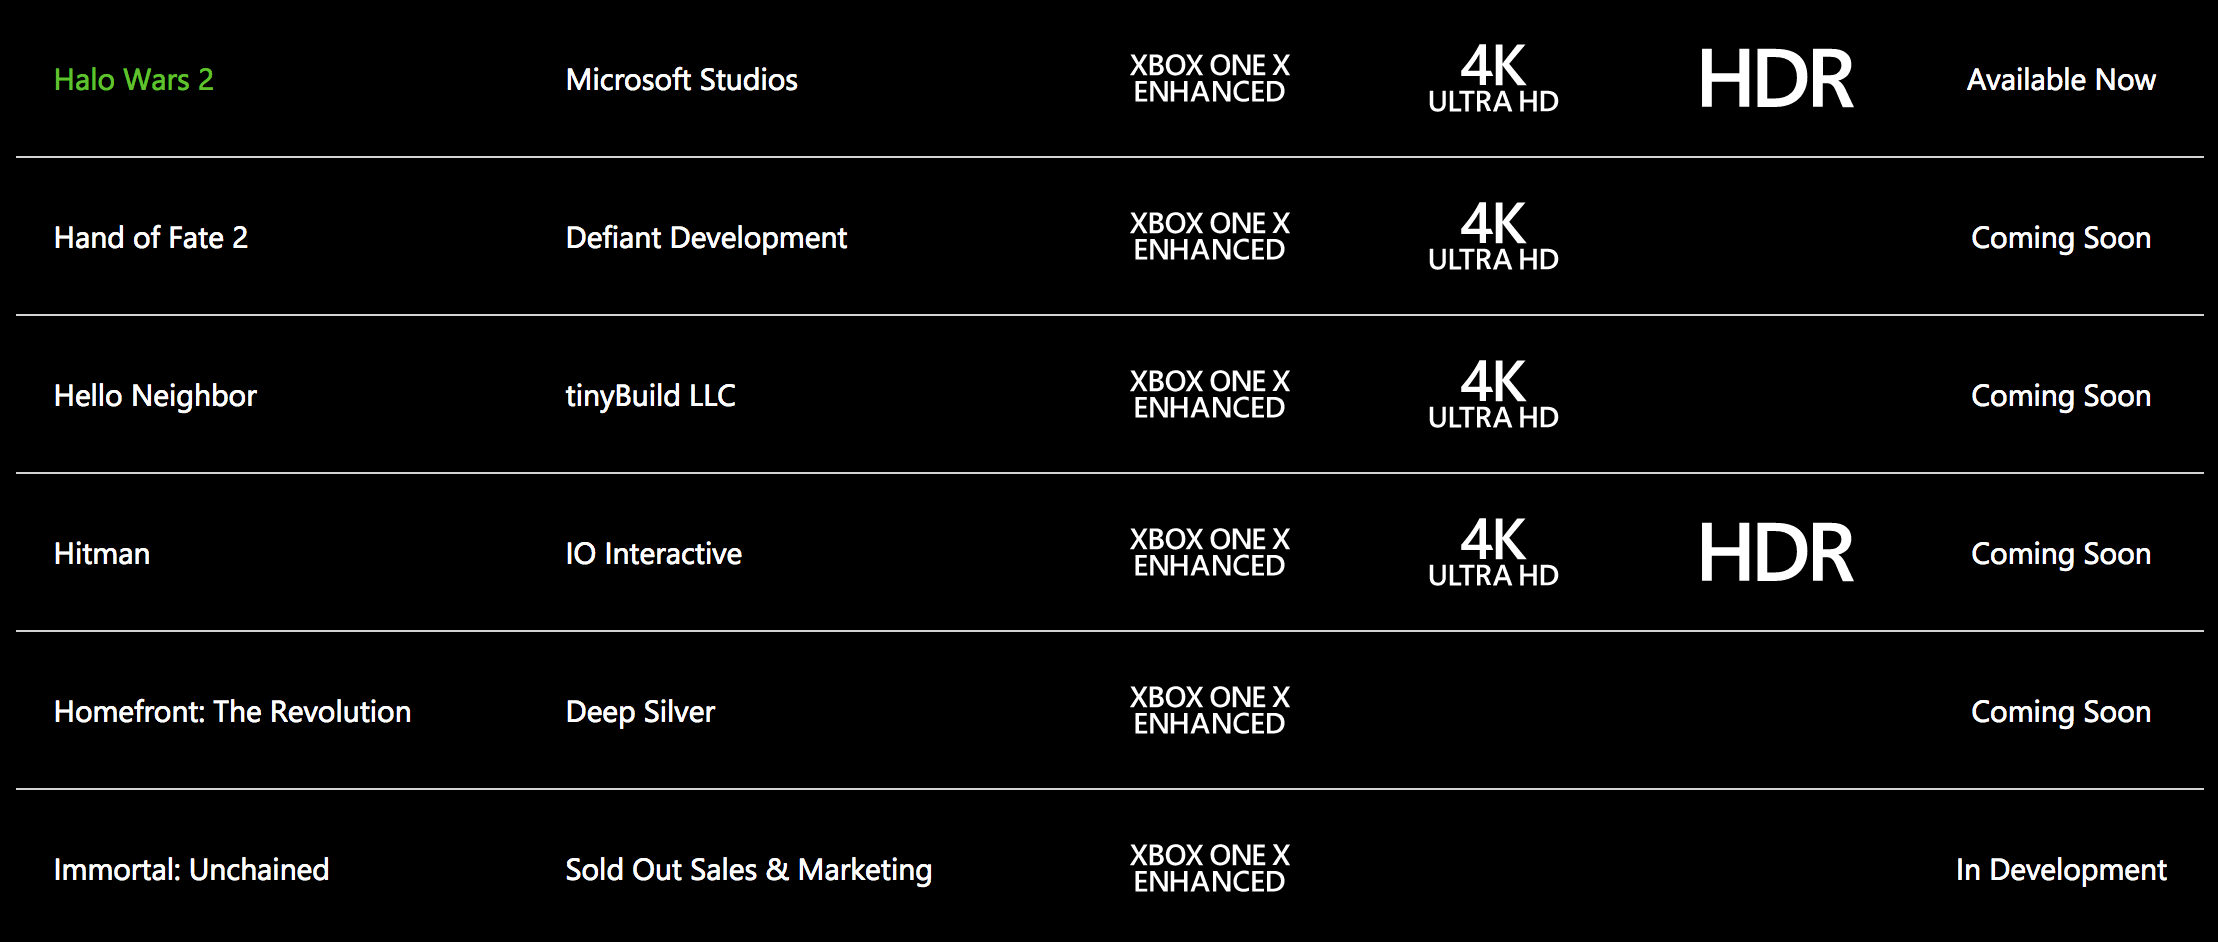 Xbox One X Enhanced games list